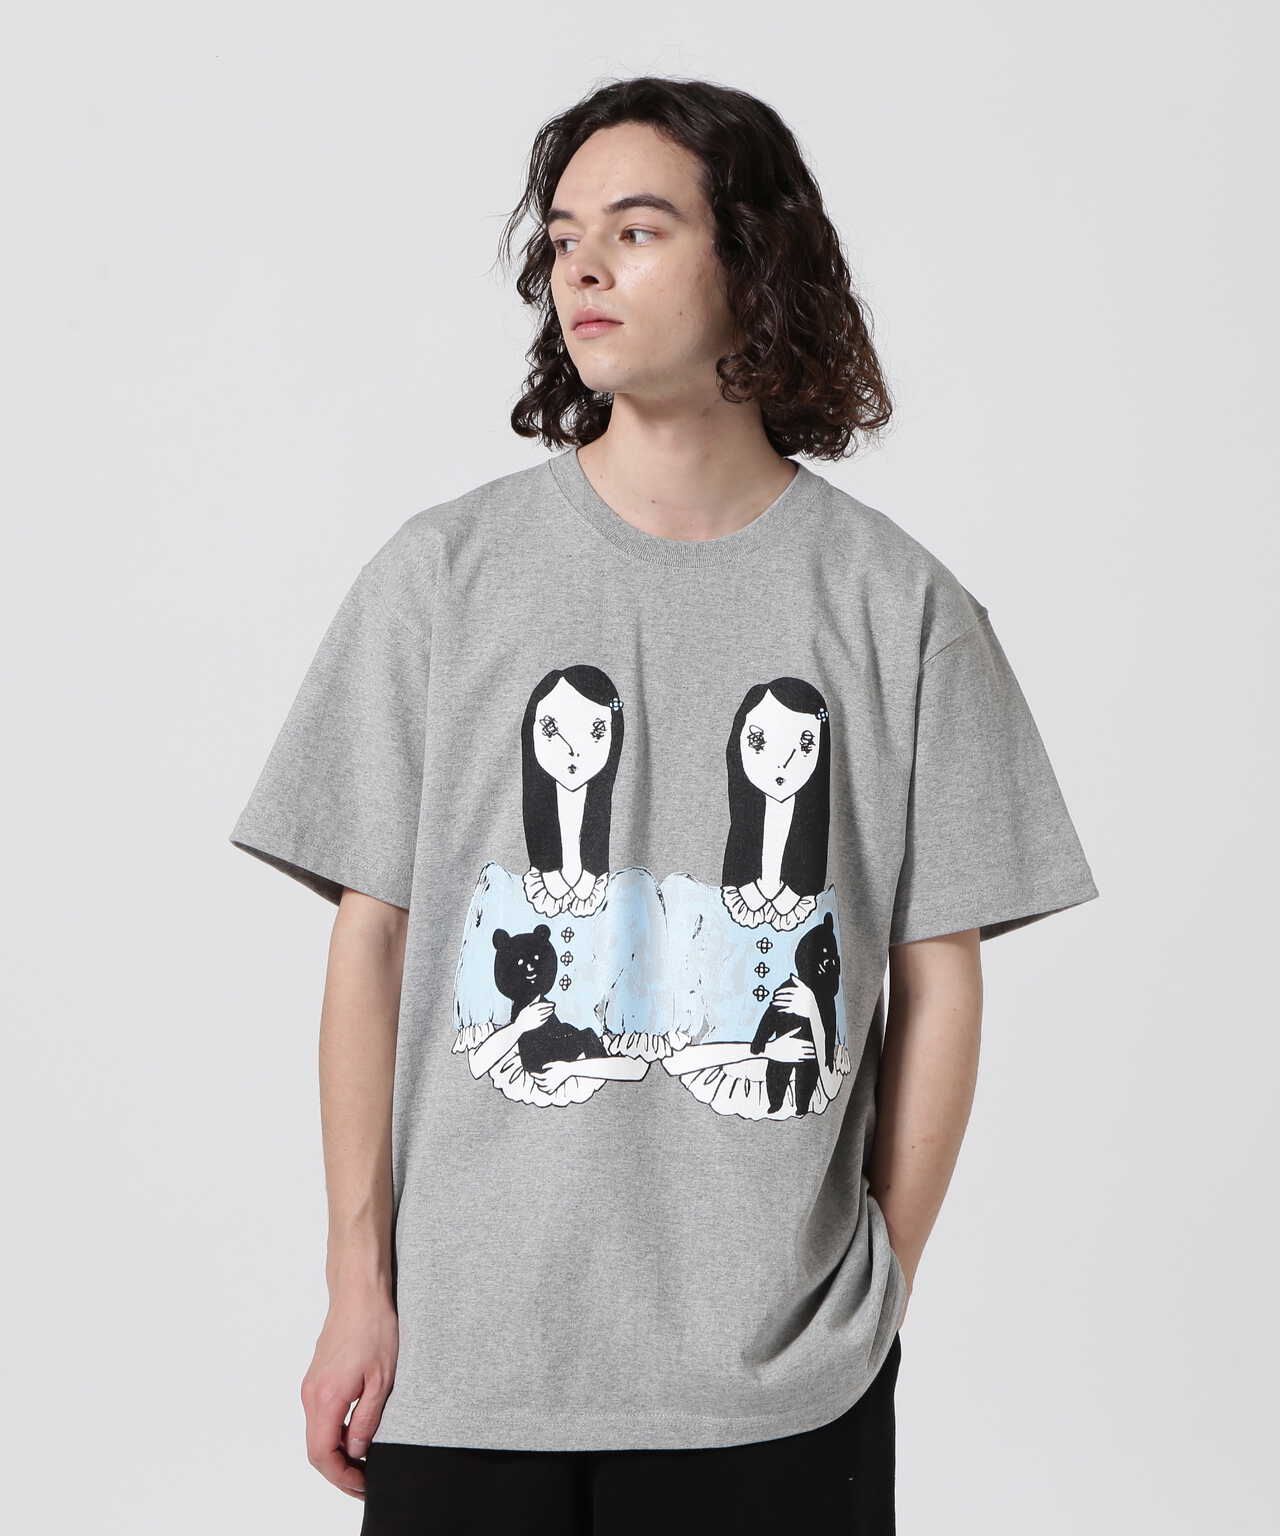 KIDILL/キディル/T-Shirt With Maya Shibasaki/グラフィックTシャツ 